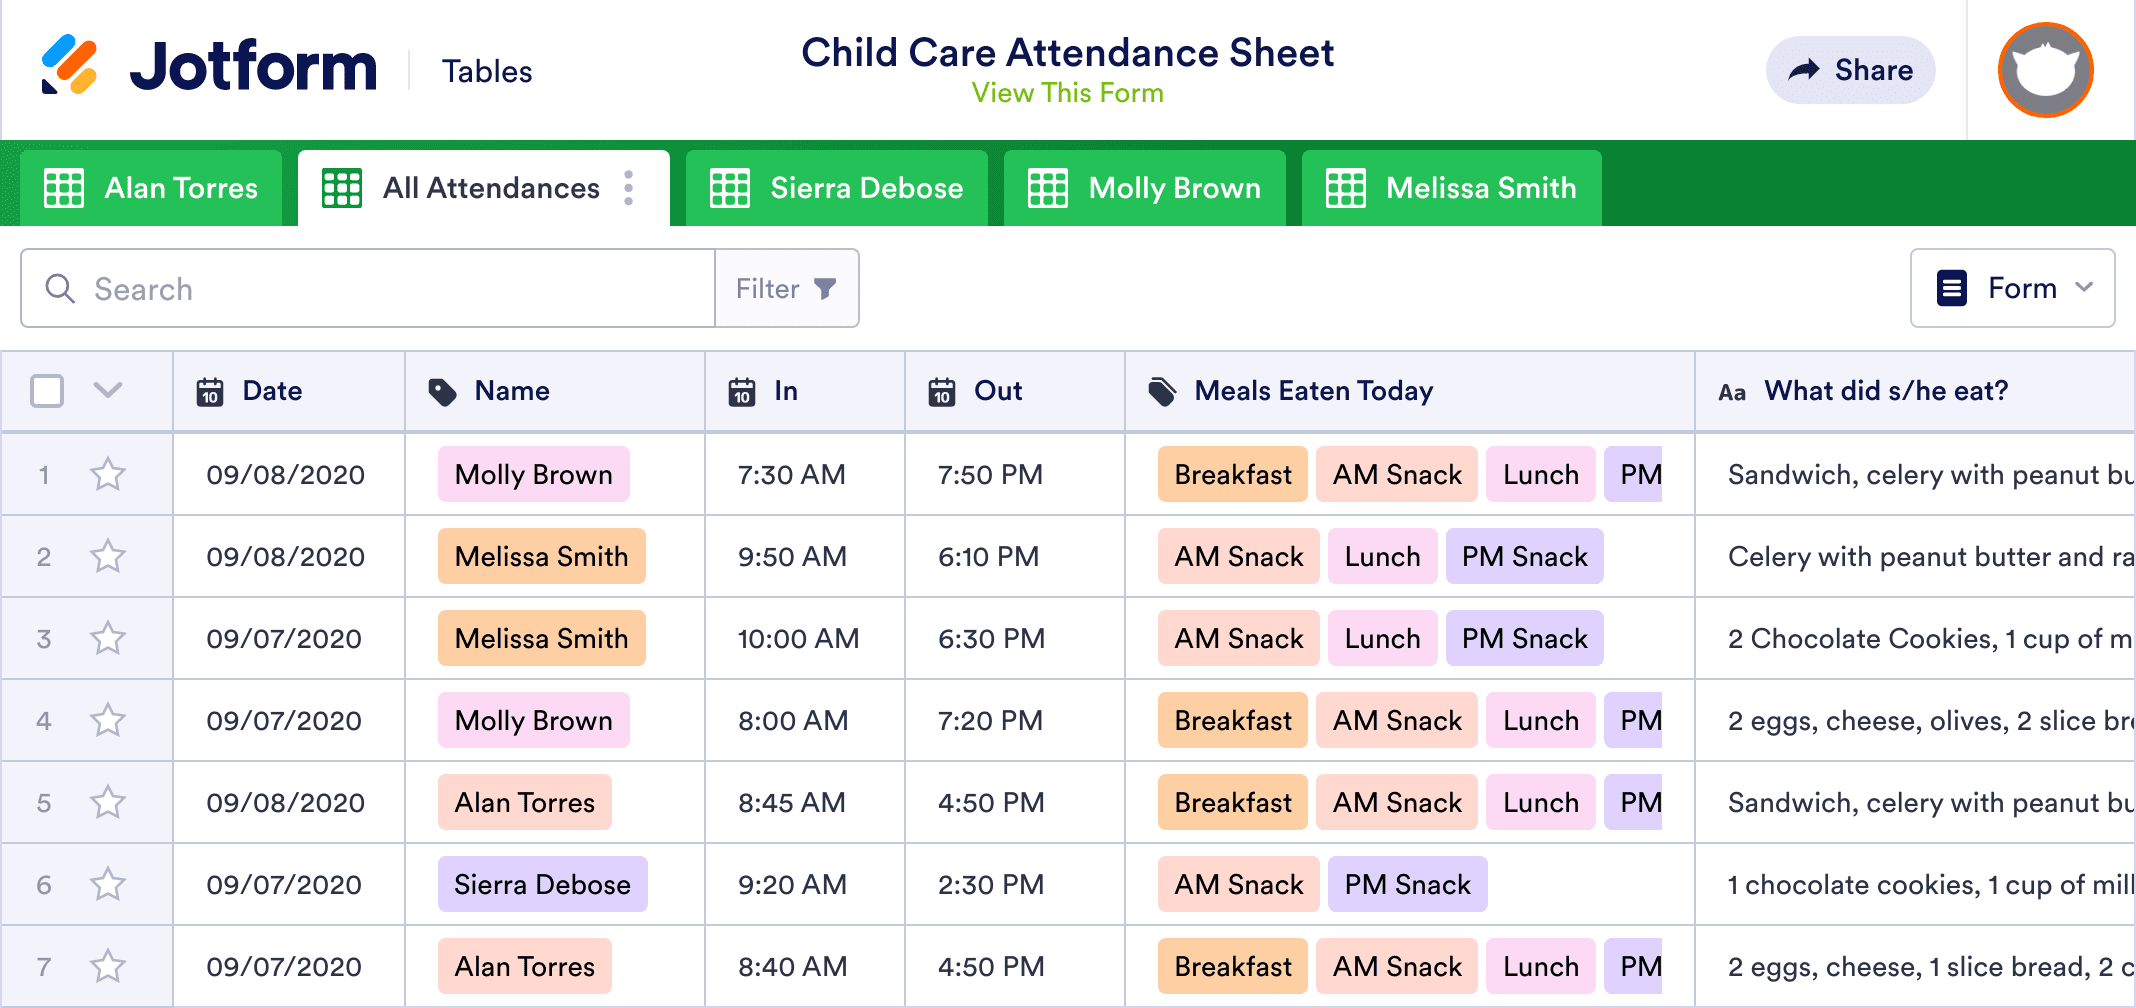 Child Care Attendance Sheet Template | Jotform Tables